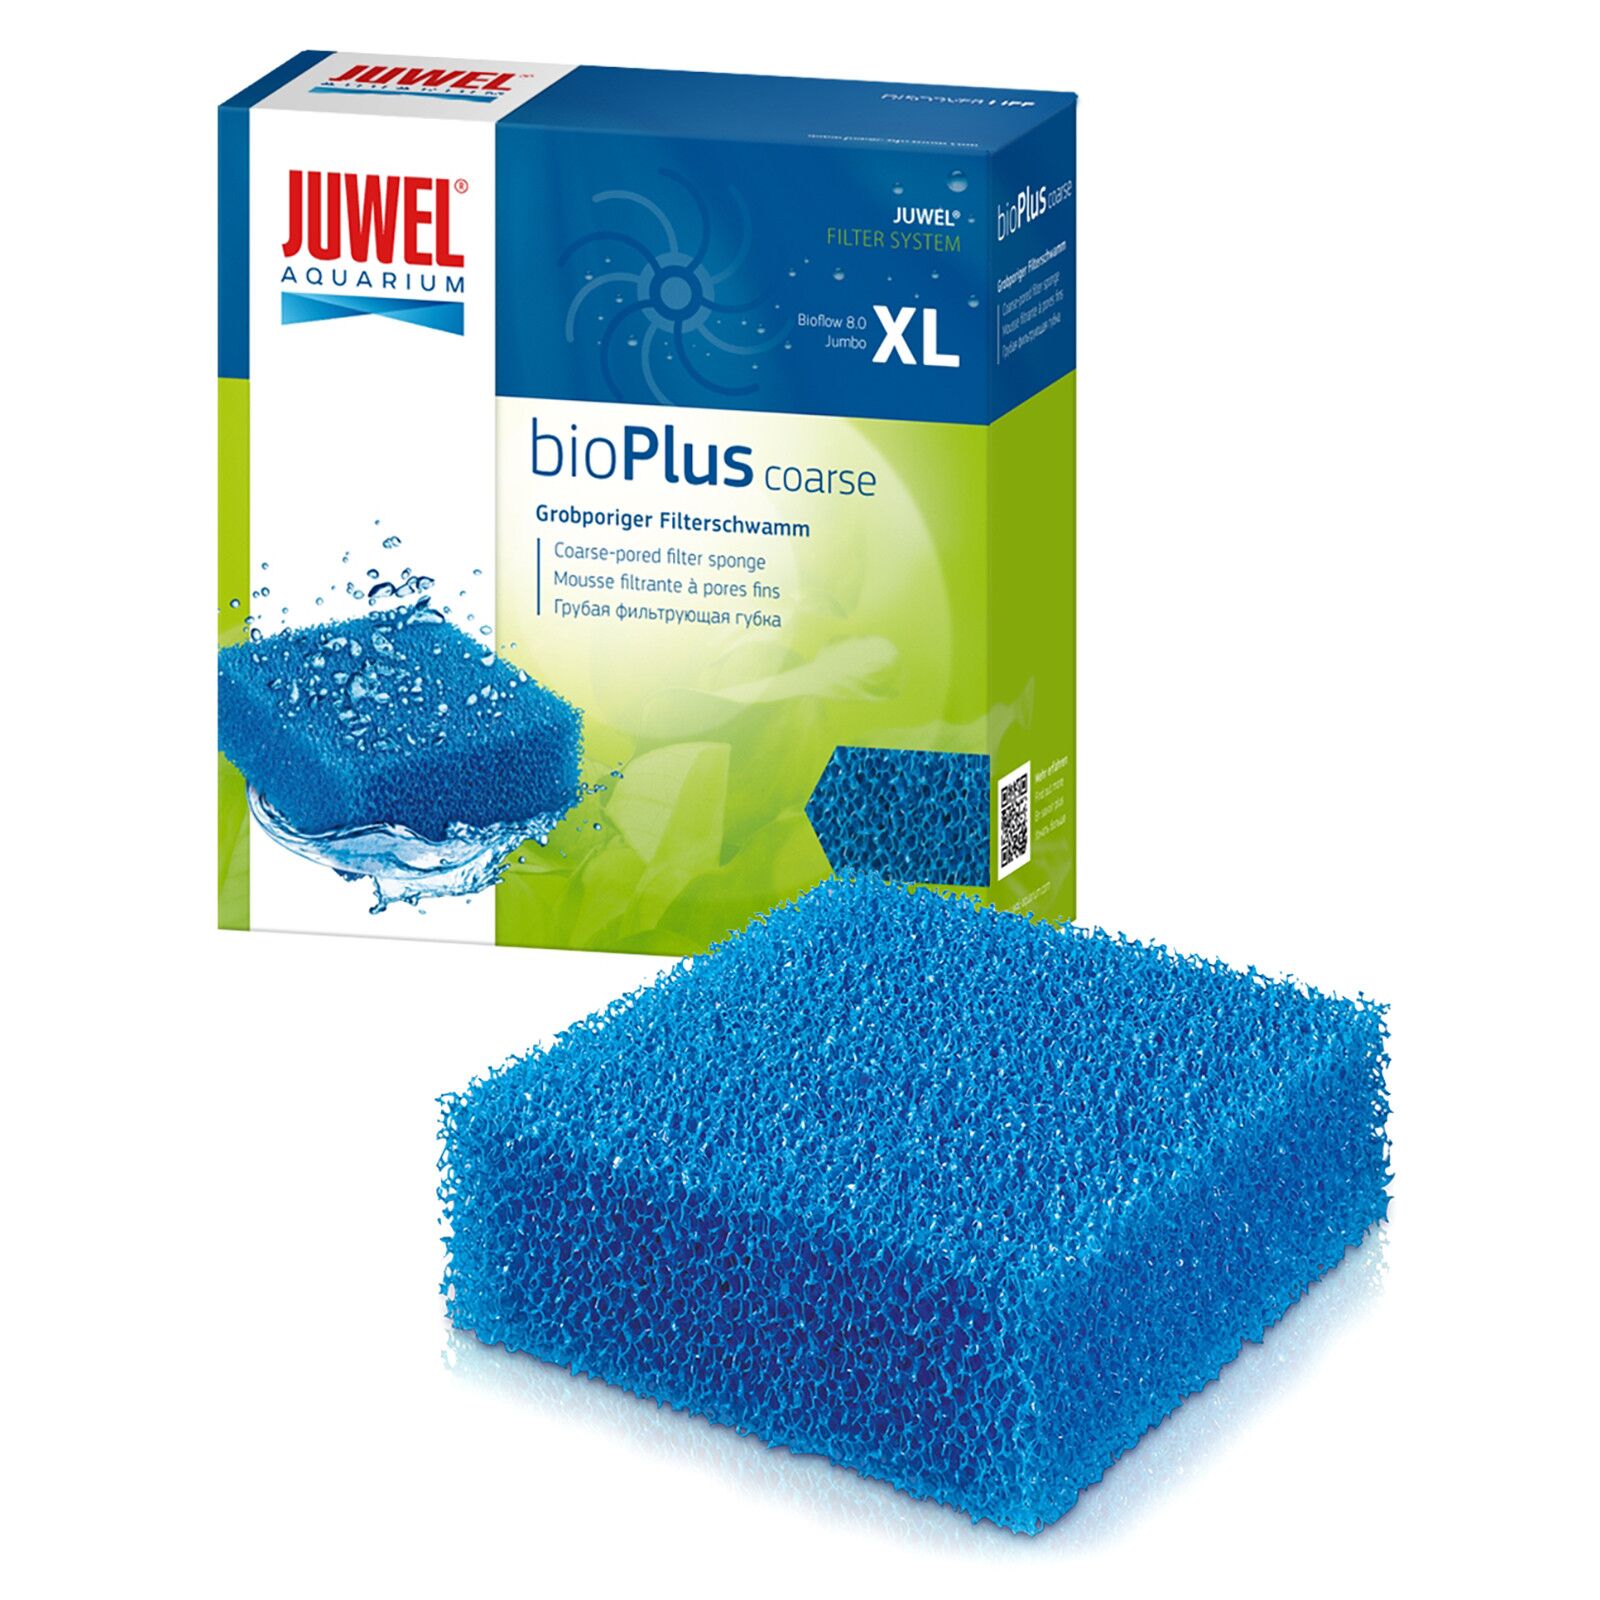 Juwel - bioPlus coarse - Filter Sponge